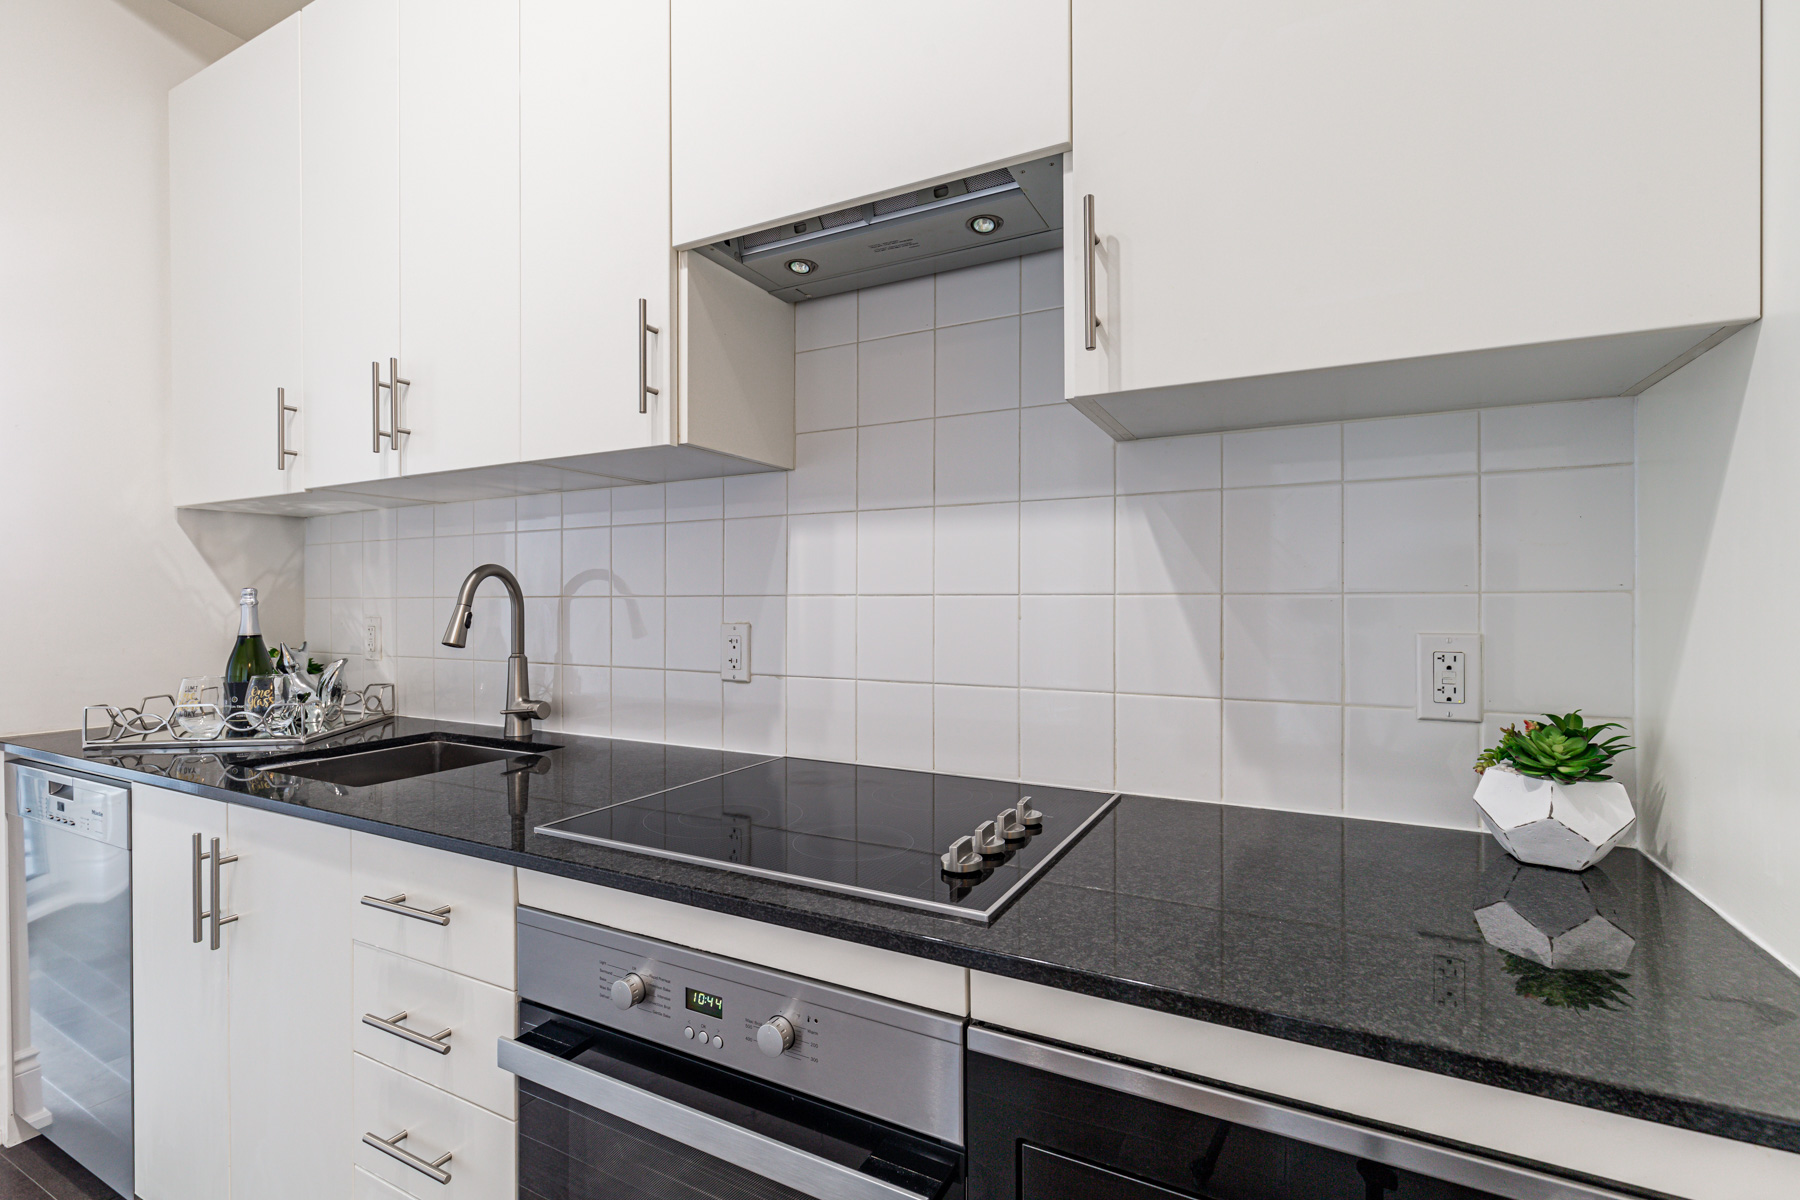 23 Glebe Rd W condo kitchen with white cabinets, black granite counters and white ceramic backsplash.